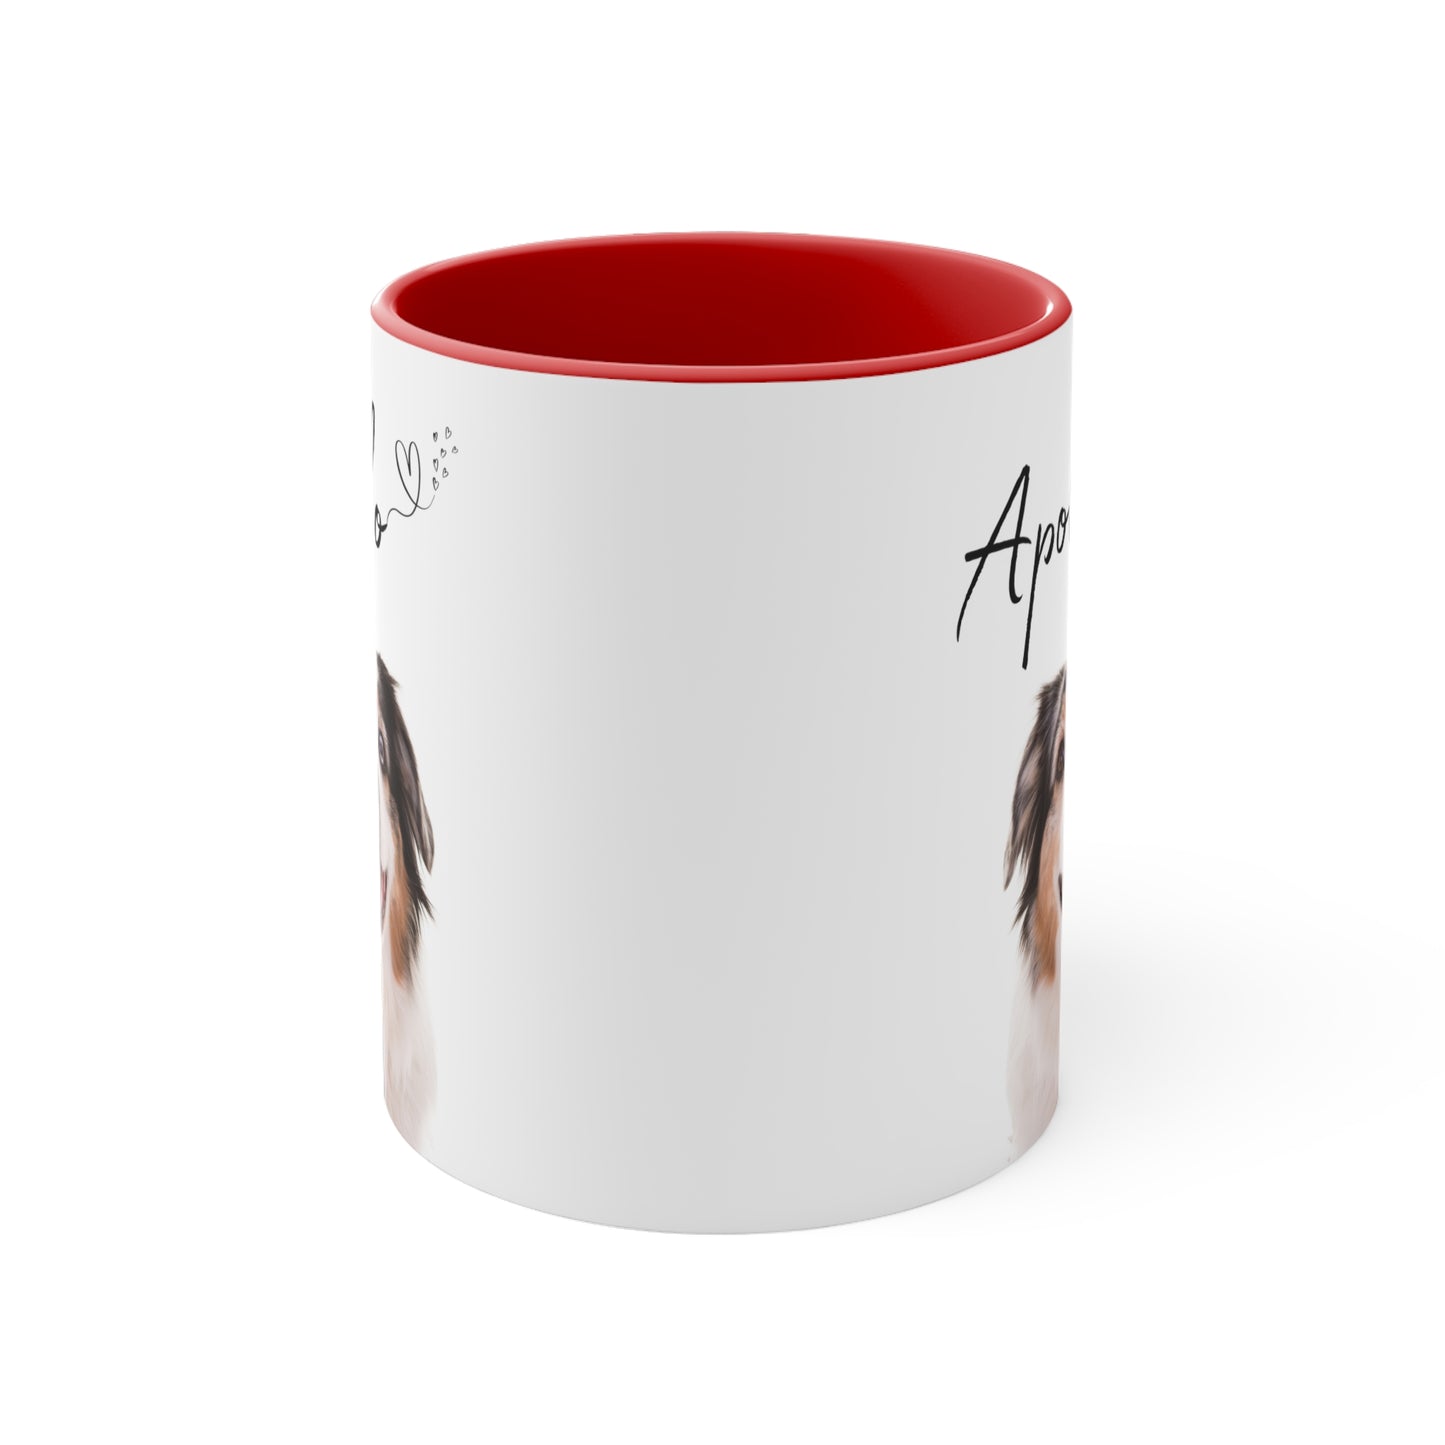 Apollo Customised Dog Birthday Accent Coffee Mug, 11oz